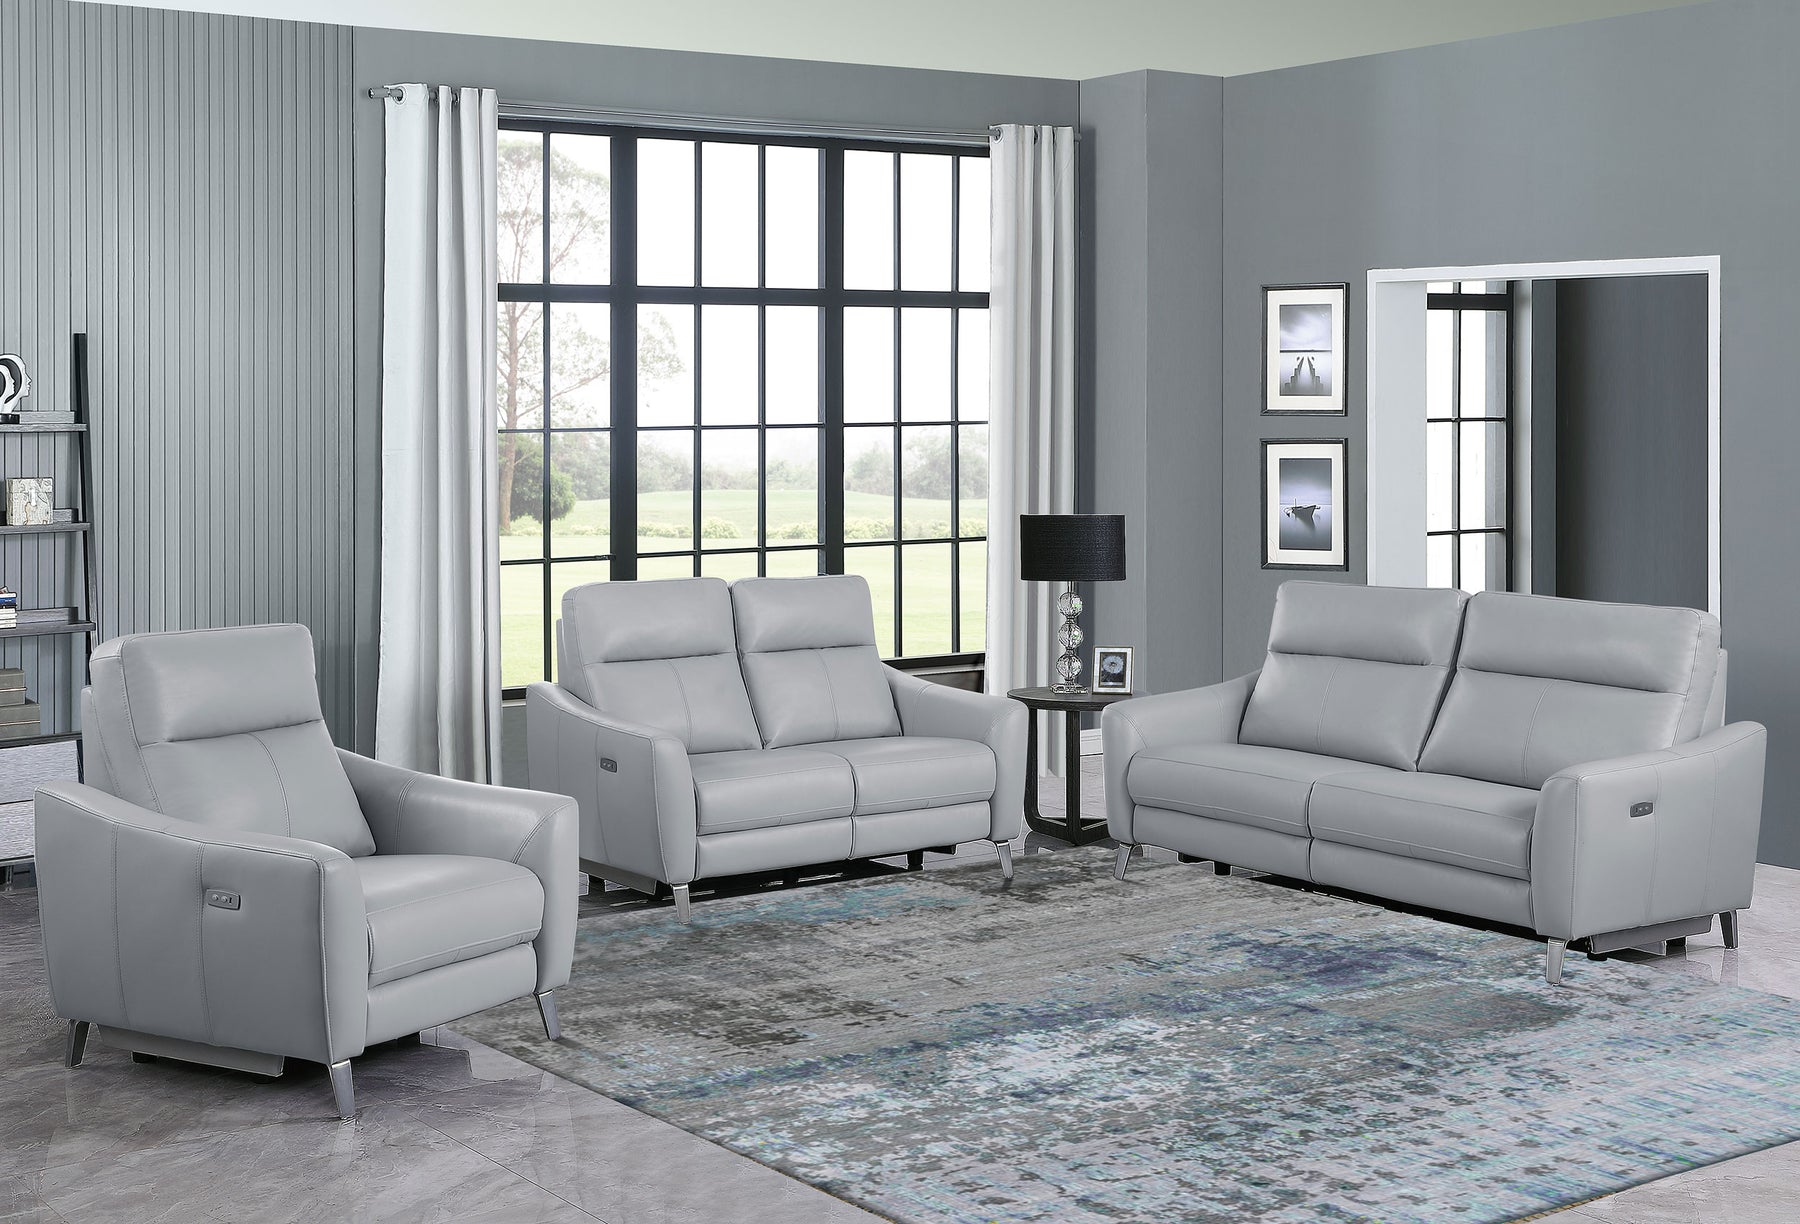 Derek Upholstered Power Living Room Set - Las Vegas Furniture Stores